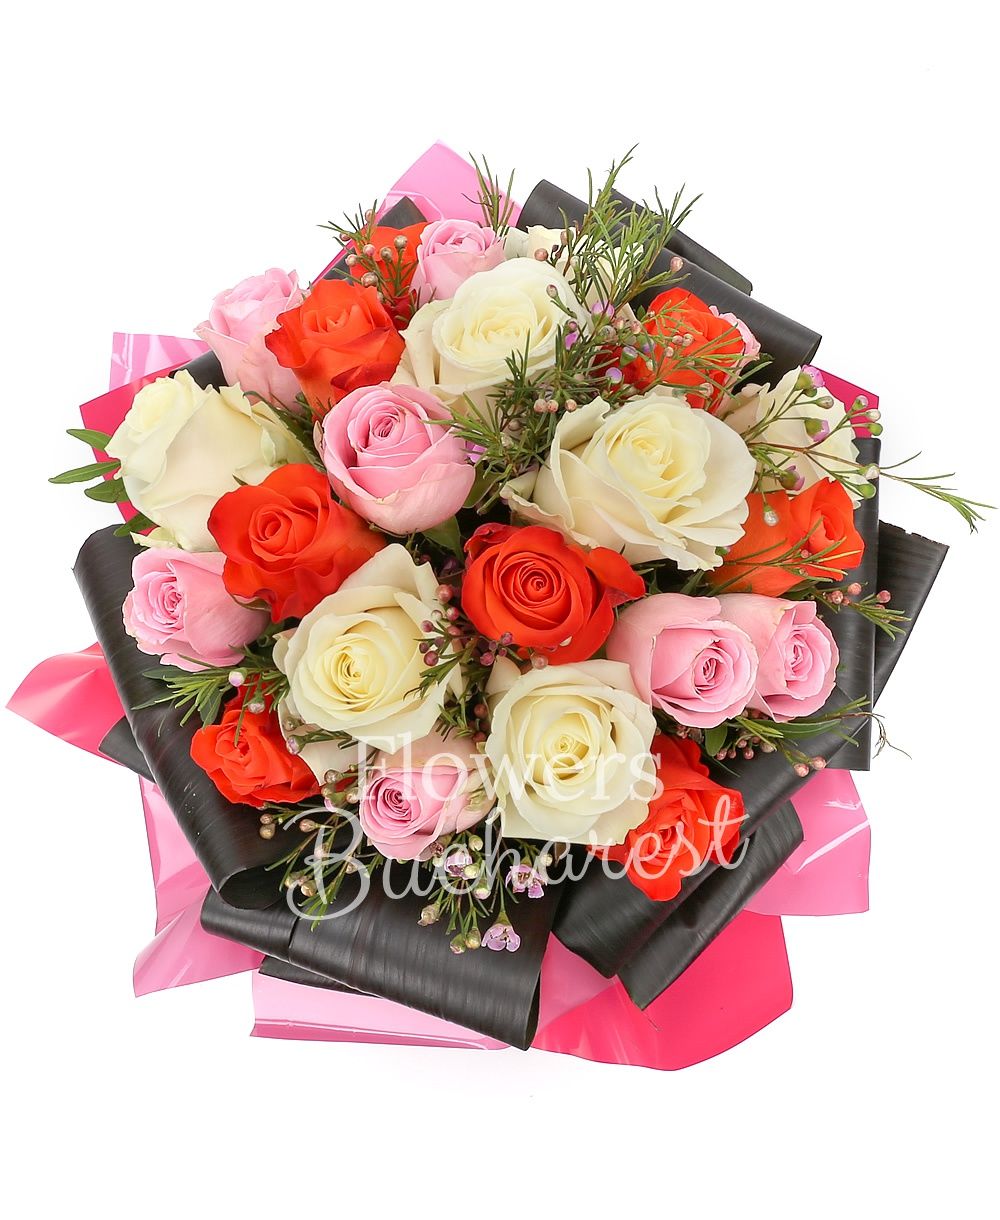 7 white roses, 7 pink roses, 7 orange roses, 5 pink waxflower, 10 aspidistra, greenery